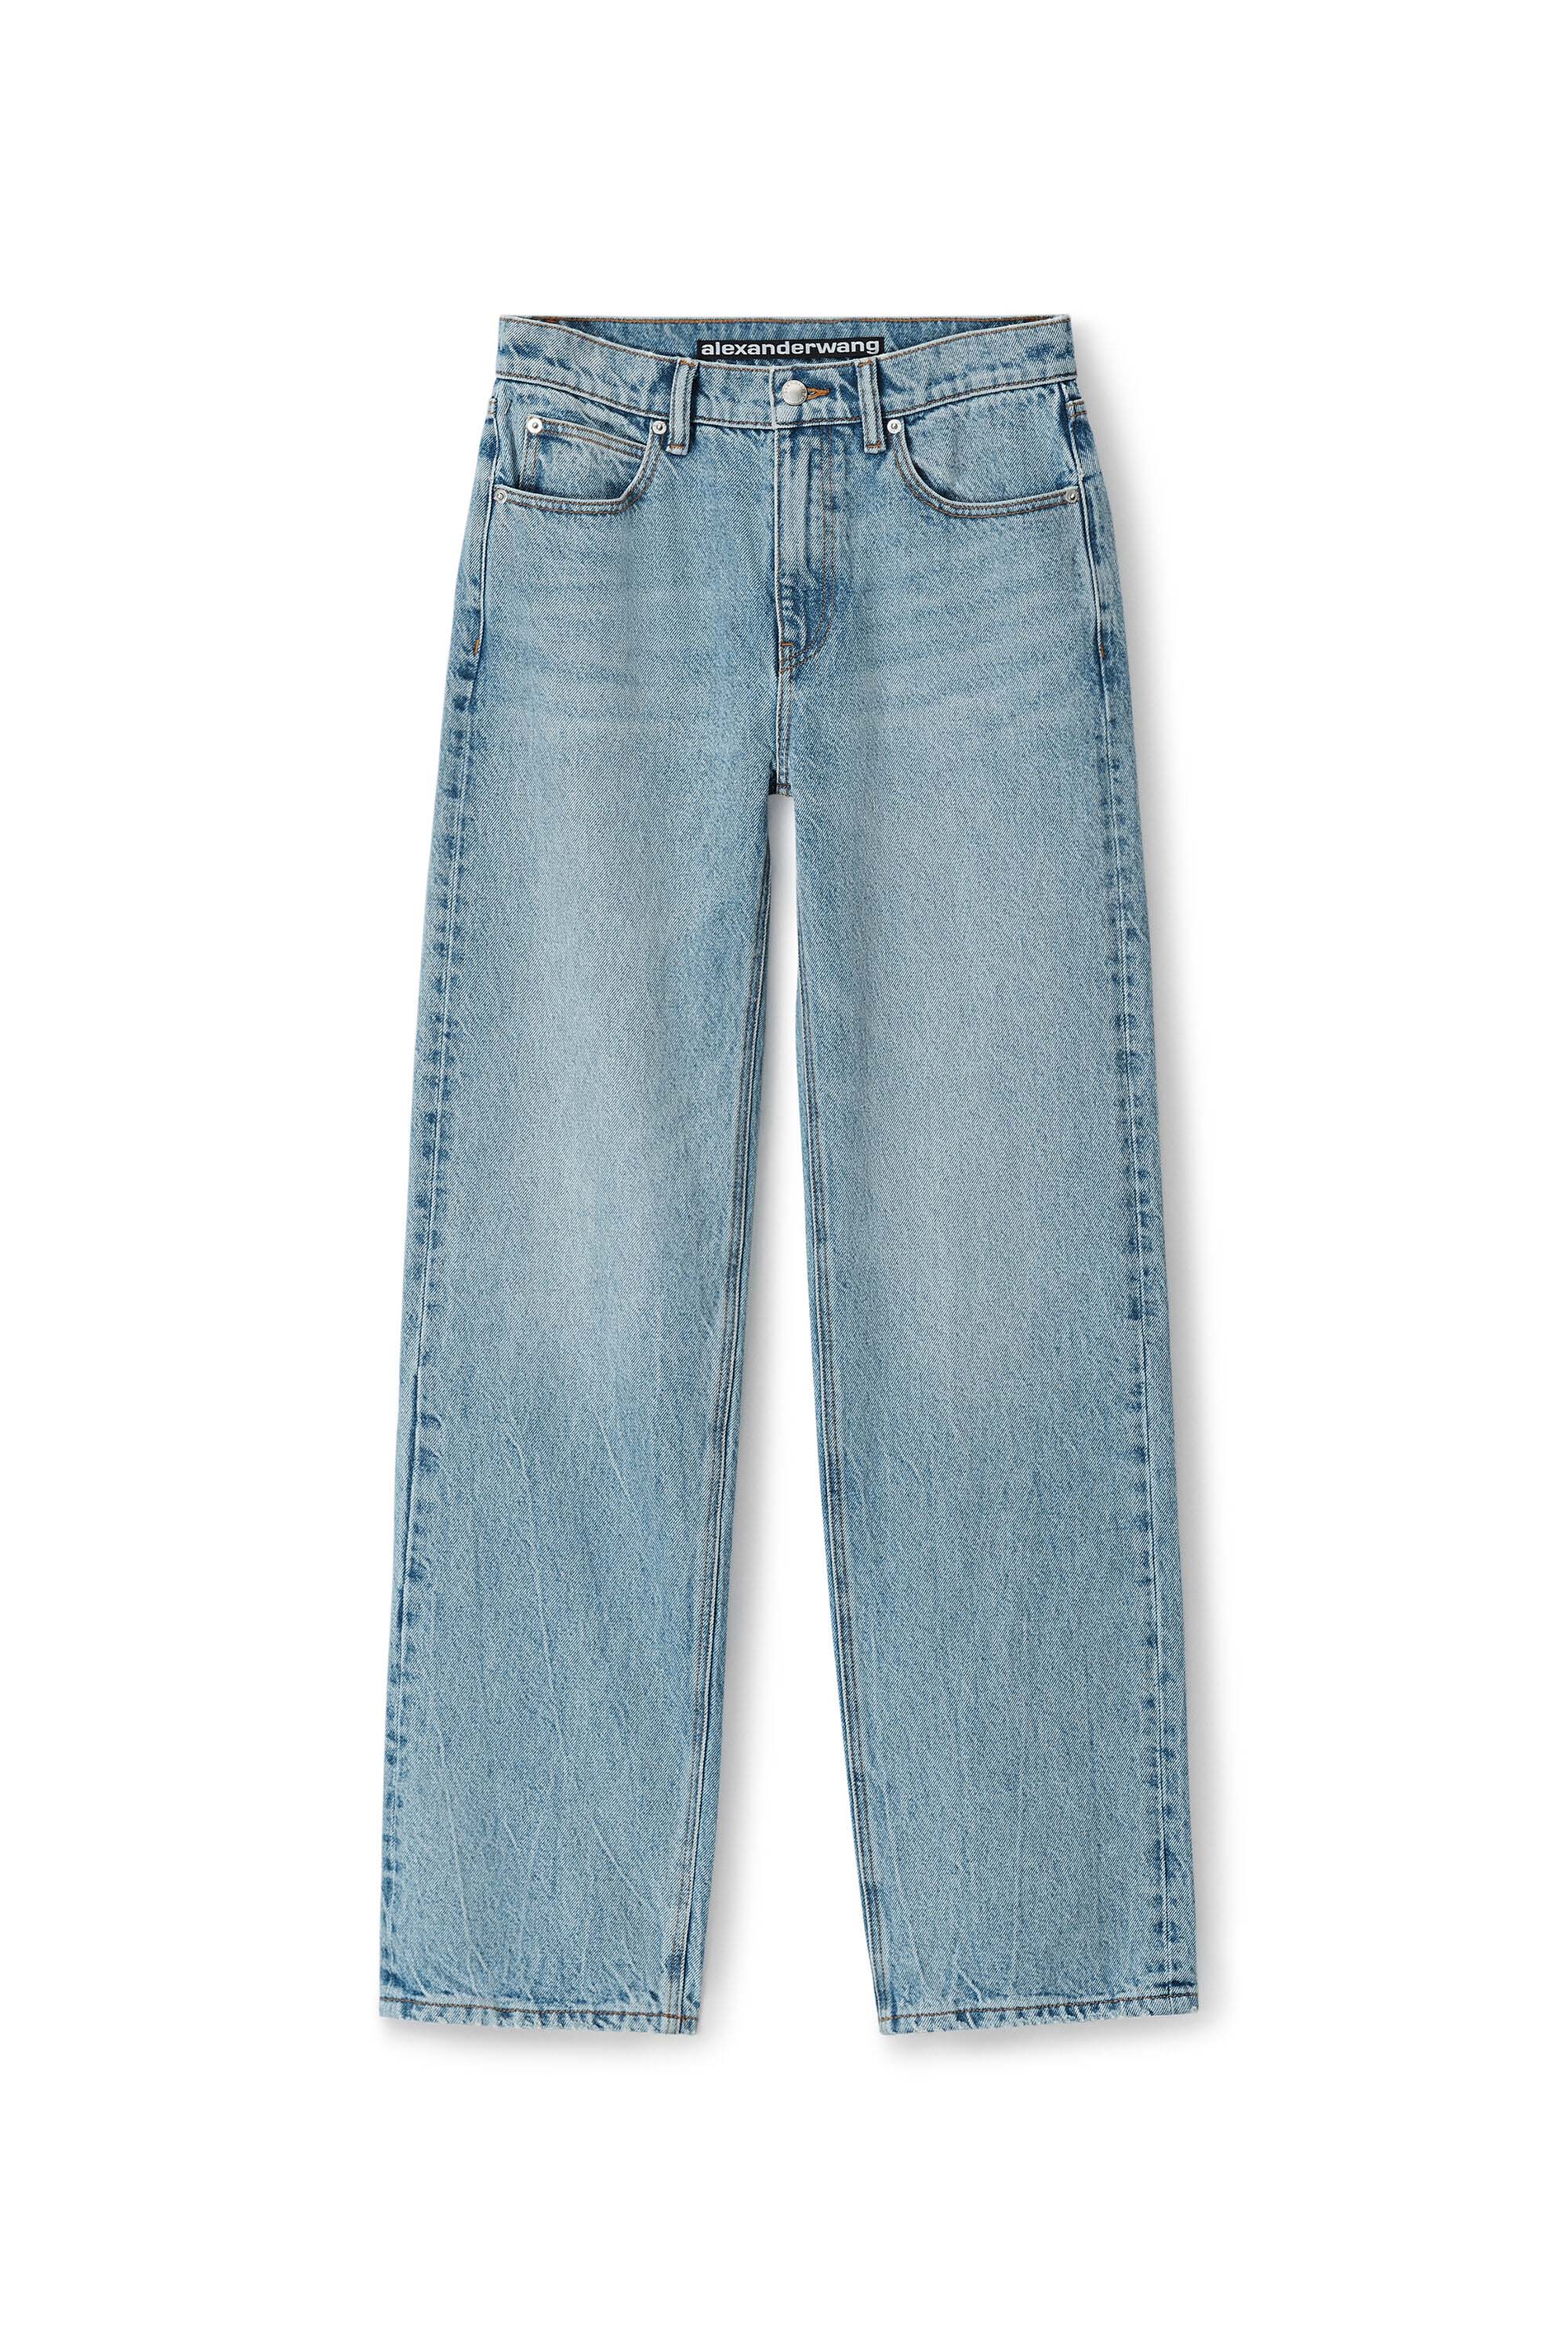 Baggy jeans Alexander Wang - GenesinlifeShops Iceland - Pat skinny fit jeans